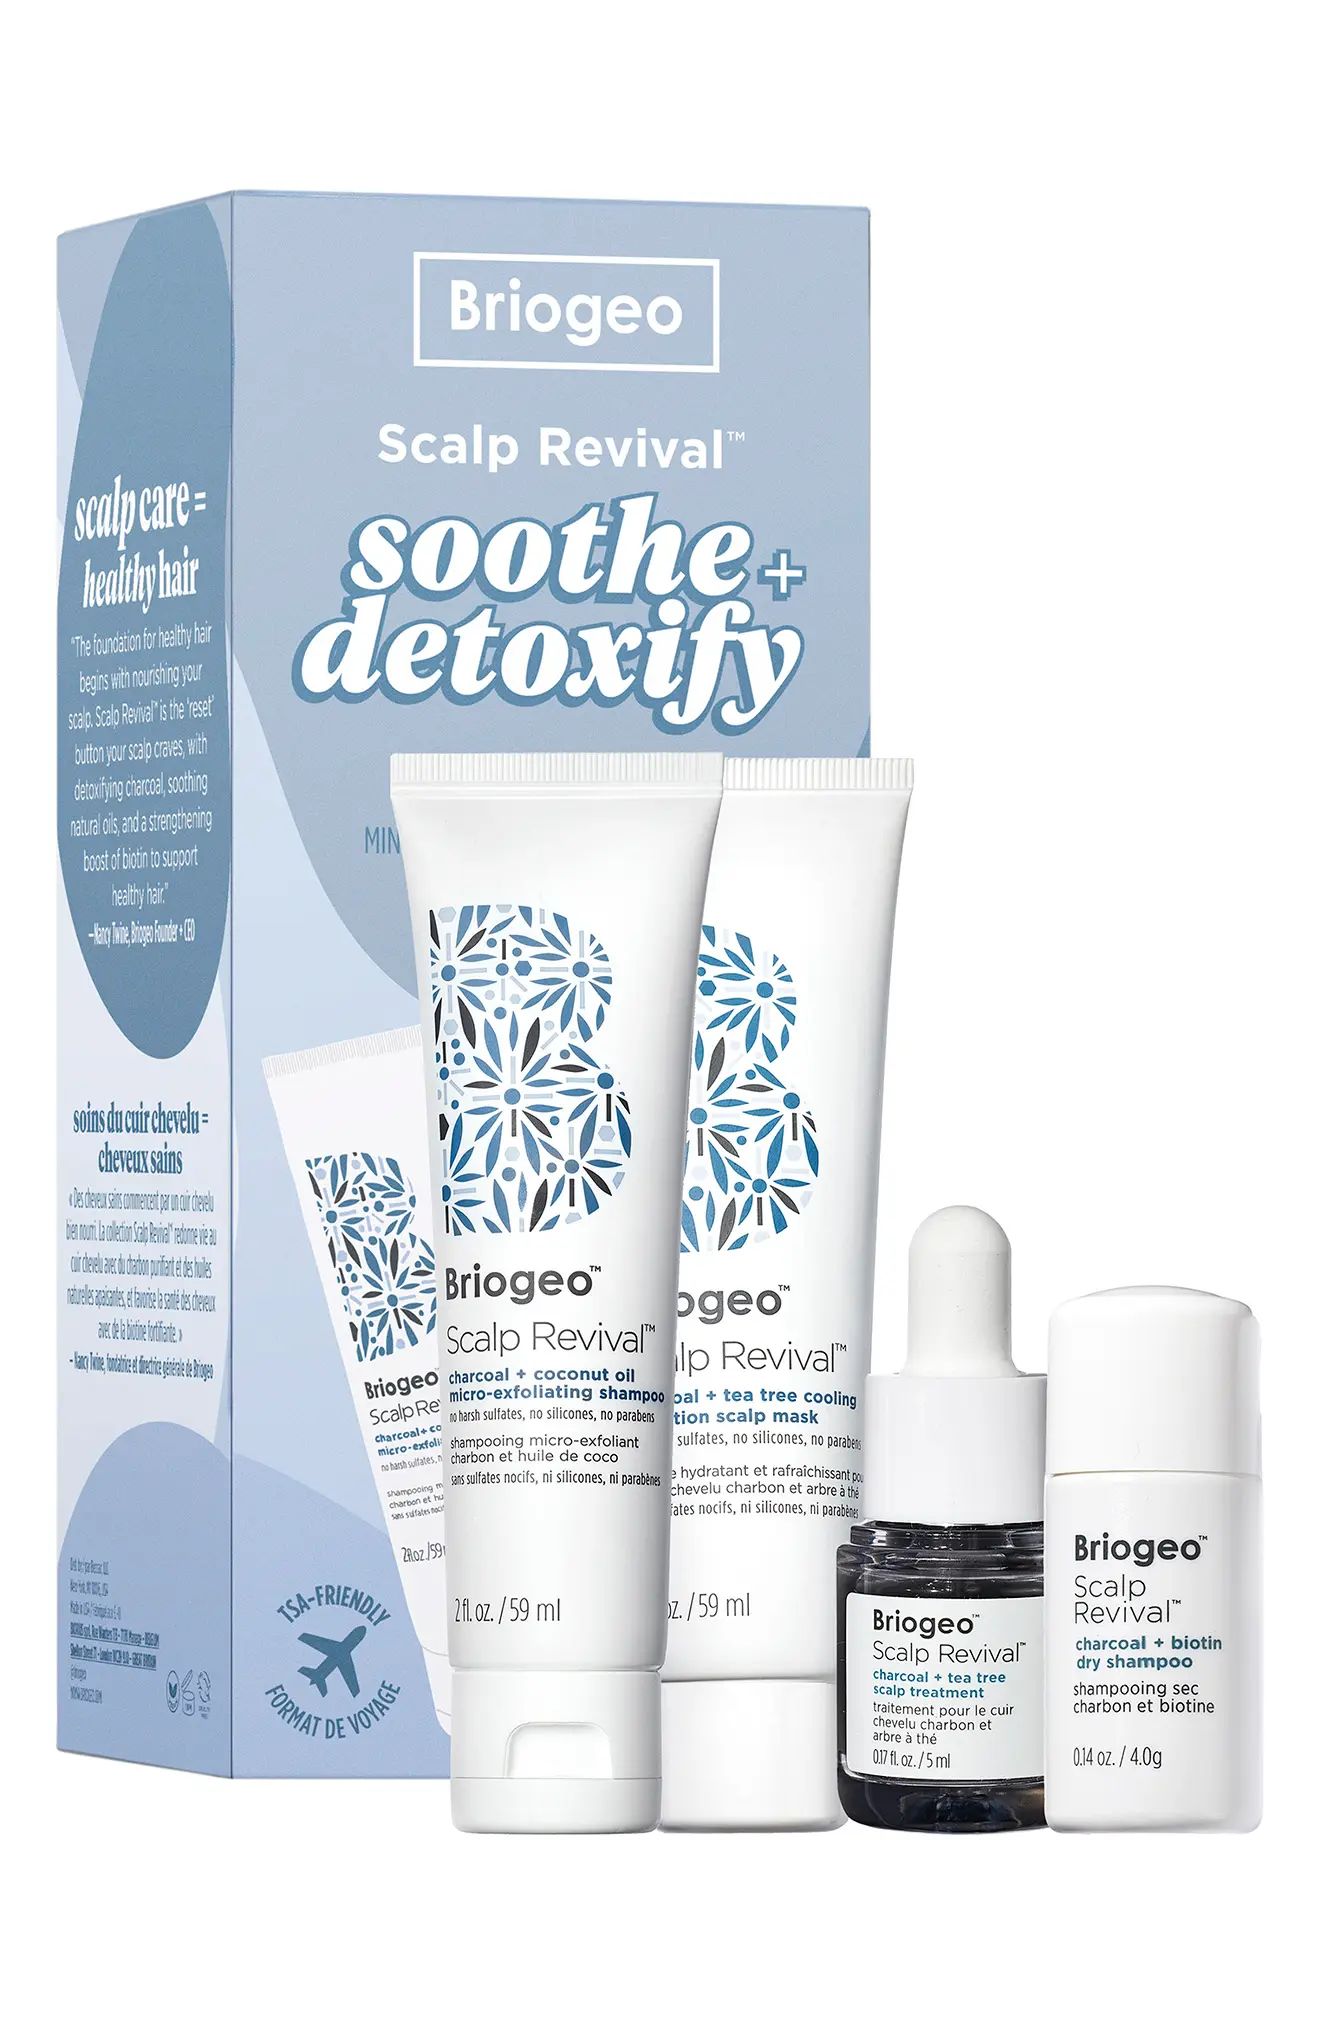 Briogeo Scalp Revival(TM) Soothe & Detoxify Hair Care Set at Nordstrom | Nordstrom